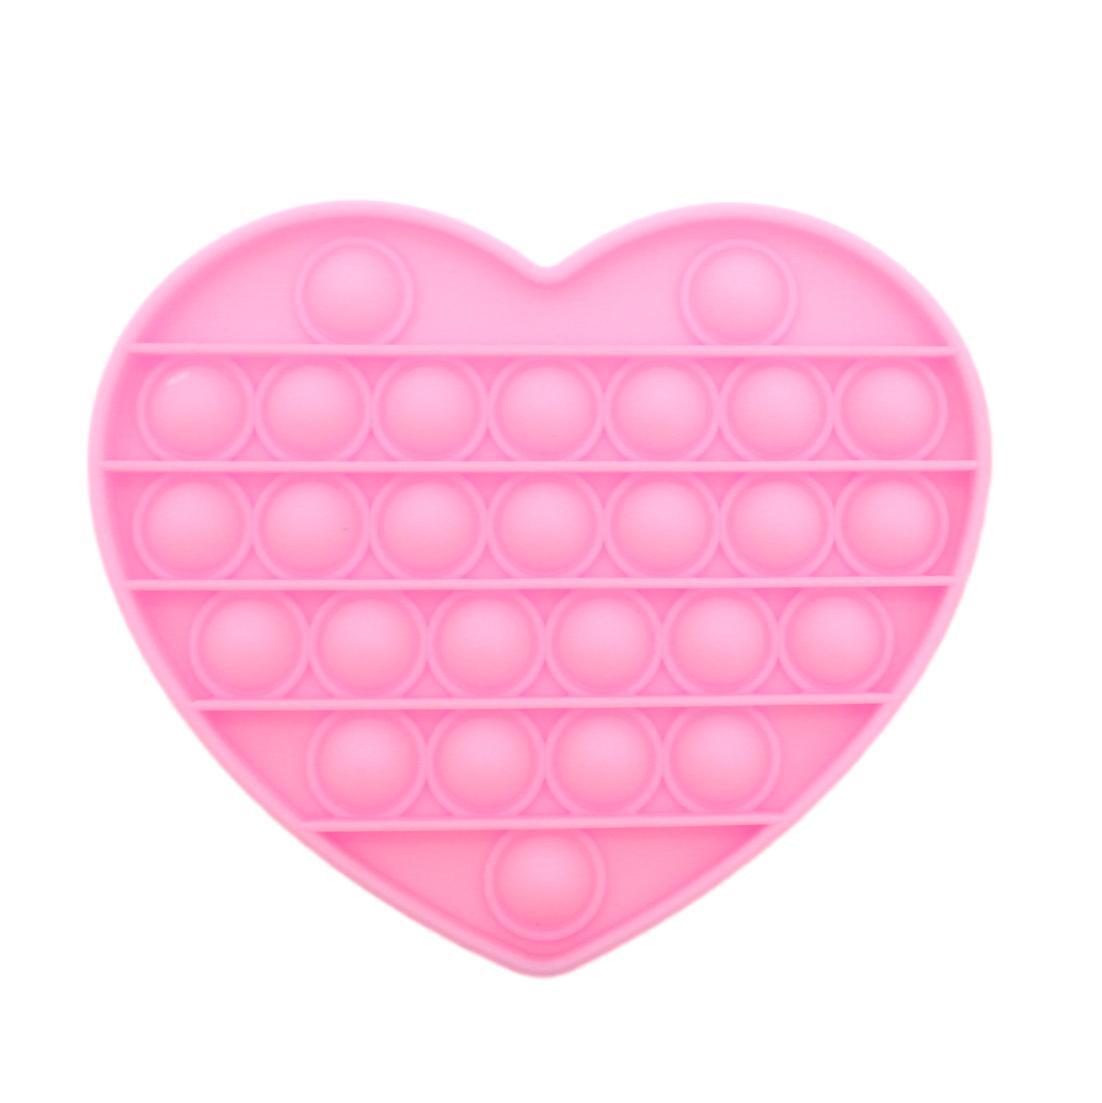 Pop Its Push It Pop Bubble Fidget Toy Sensory Stress Relief Tiktok Game Gift [Design: Heart - Pink]